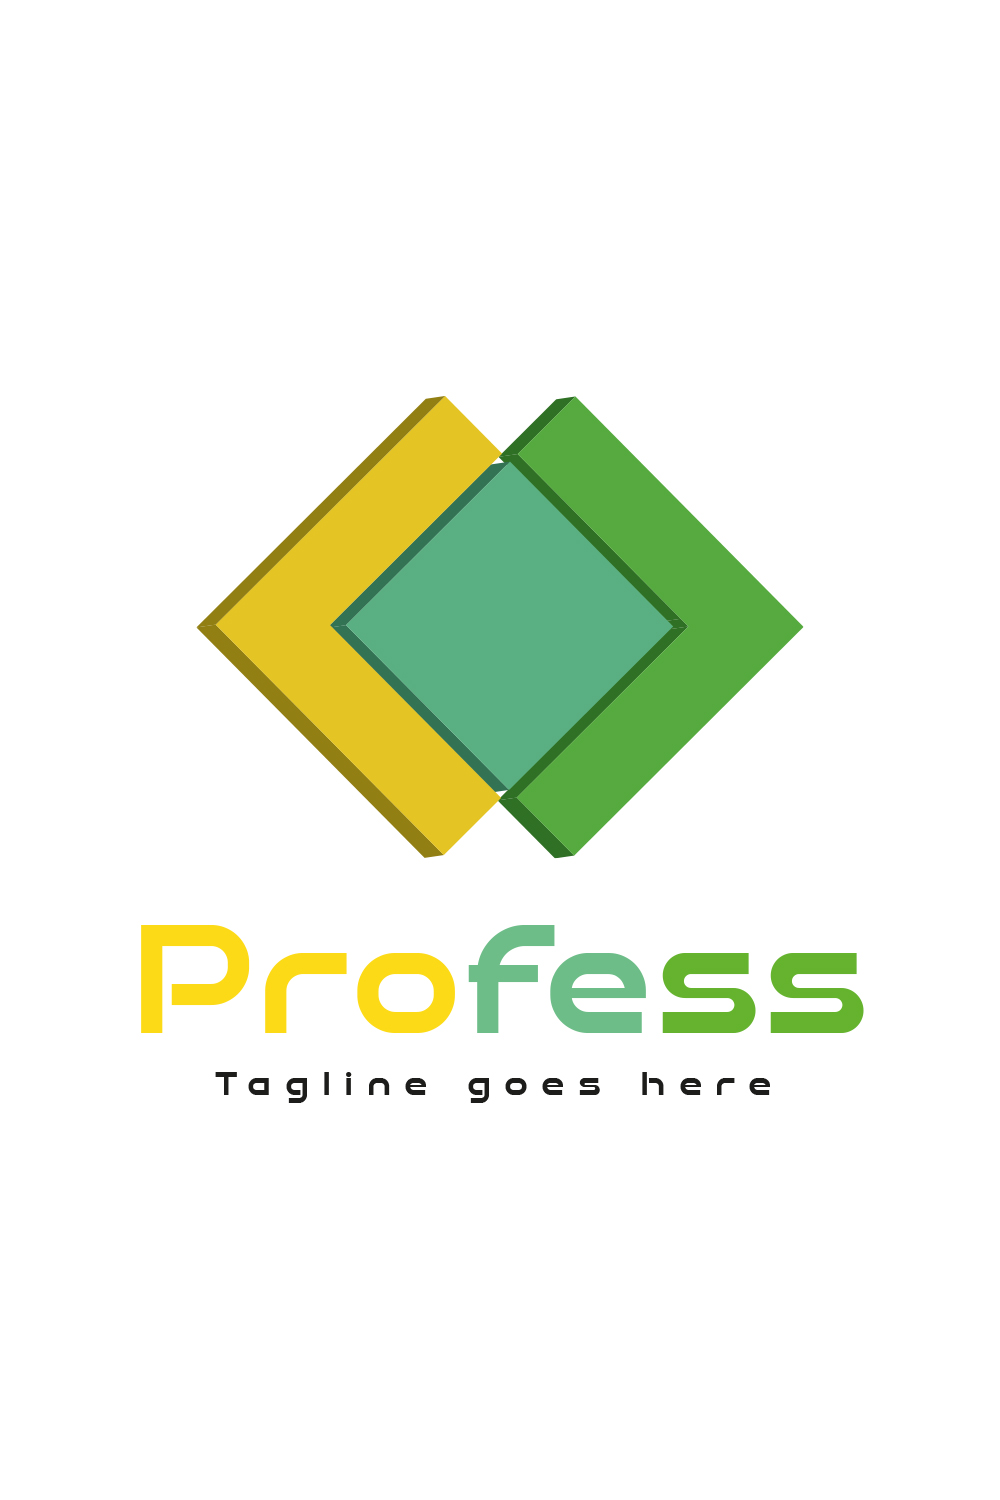 Professional 3D logo design pinterest preview image.